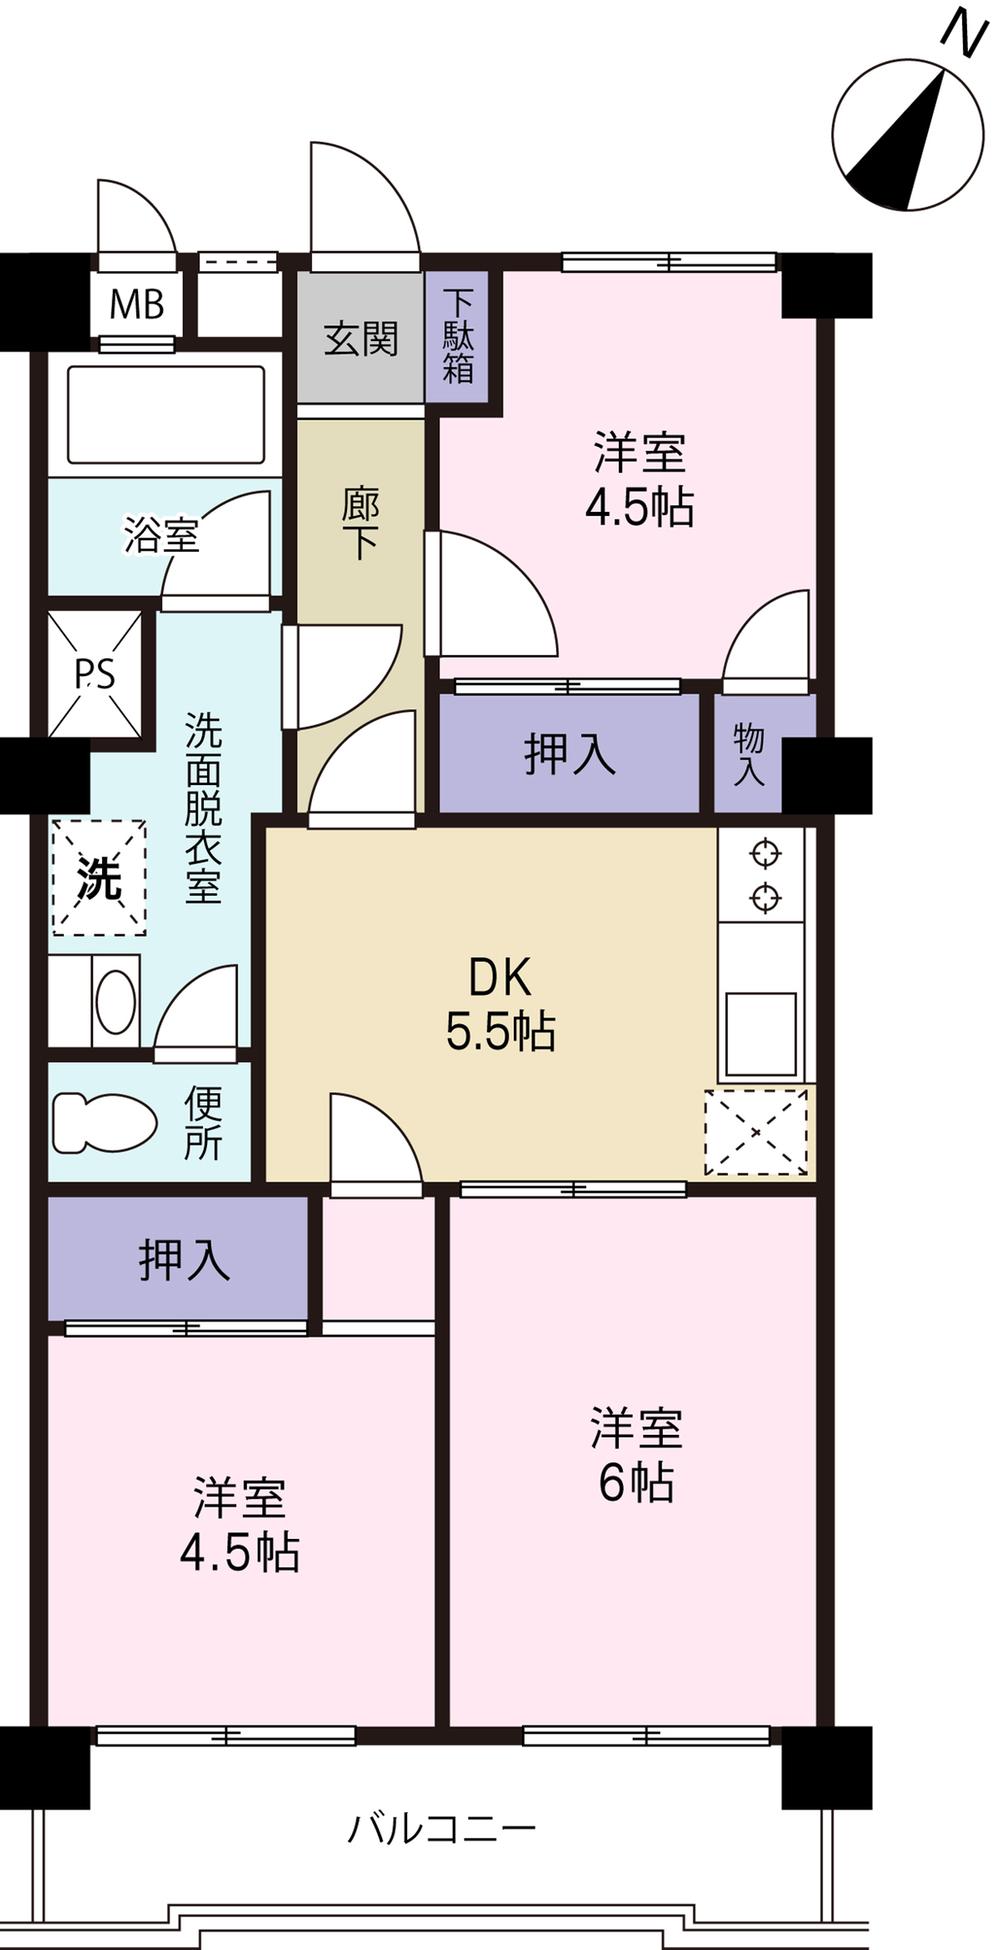 Floor plan. 3DK, Price 19,800,000 yen, Occupied area 49.92 sq m , Balcony area 6 sq m